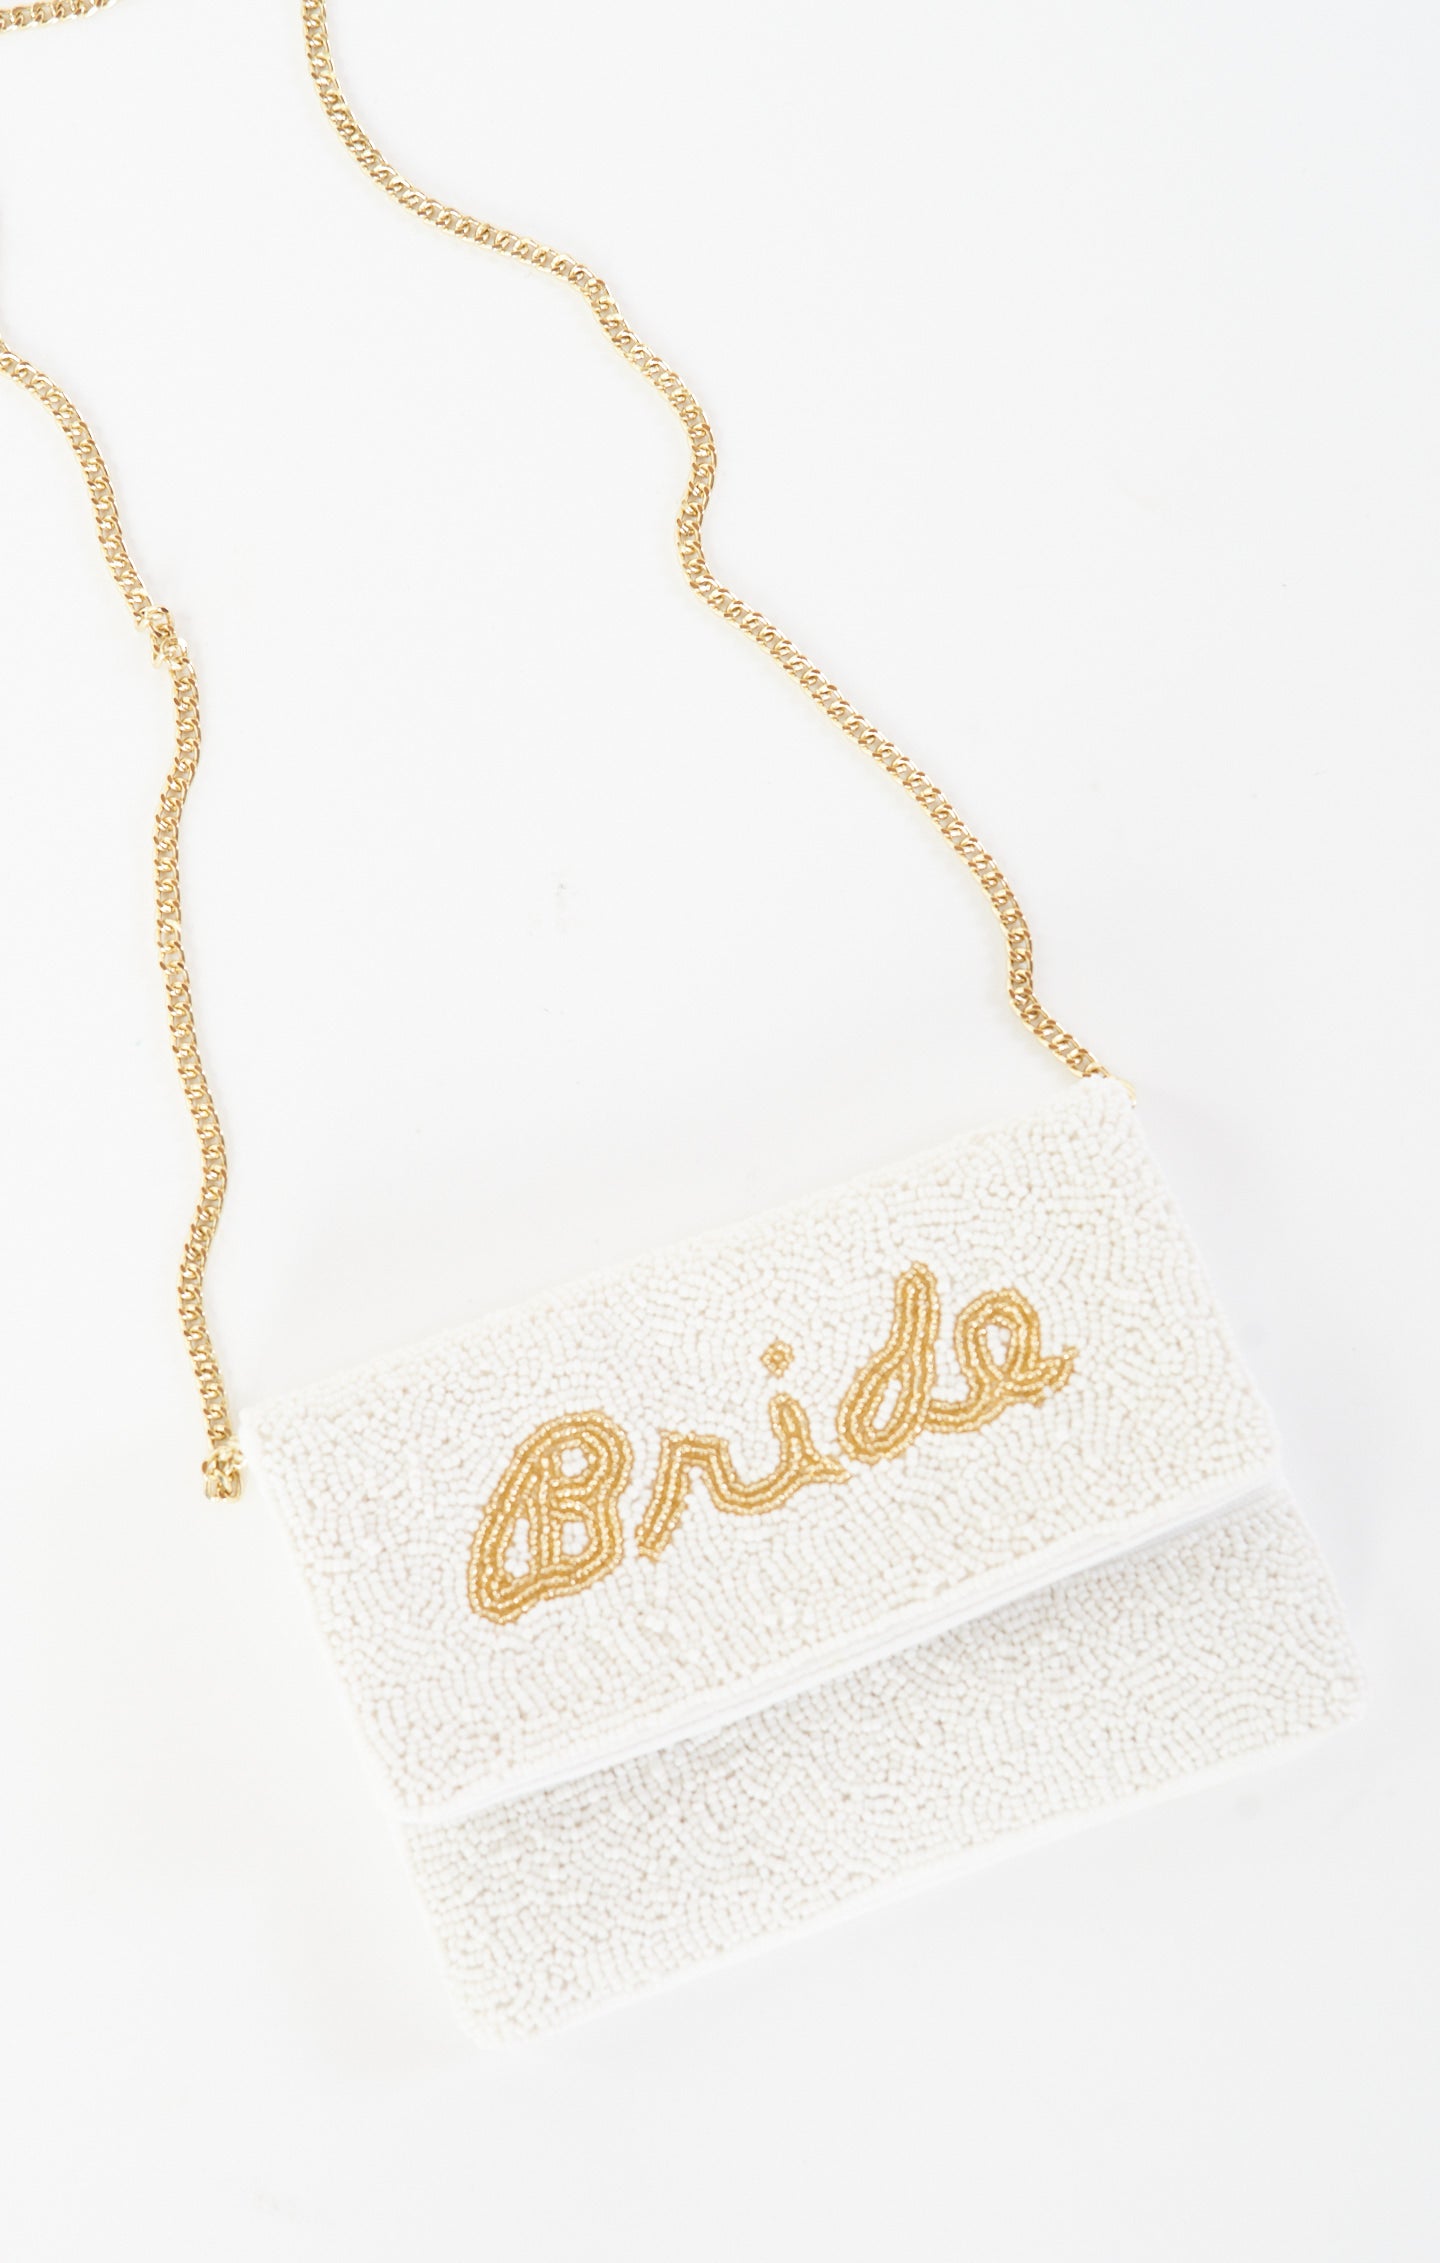 Bride, Mrs. Clutch Bag - White Texted Bridal Purse Bride